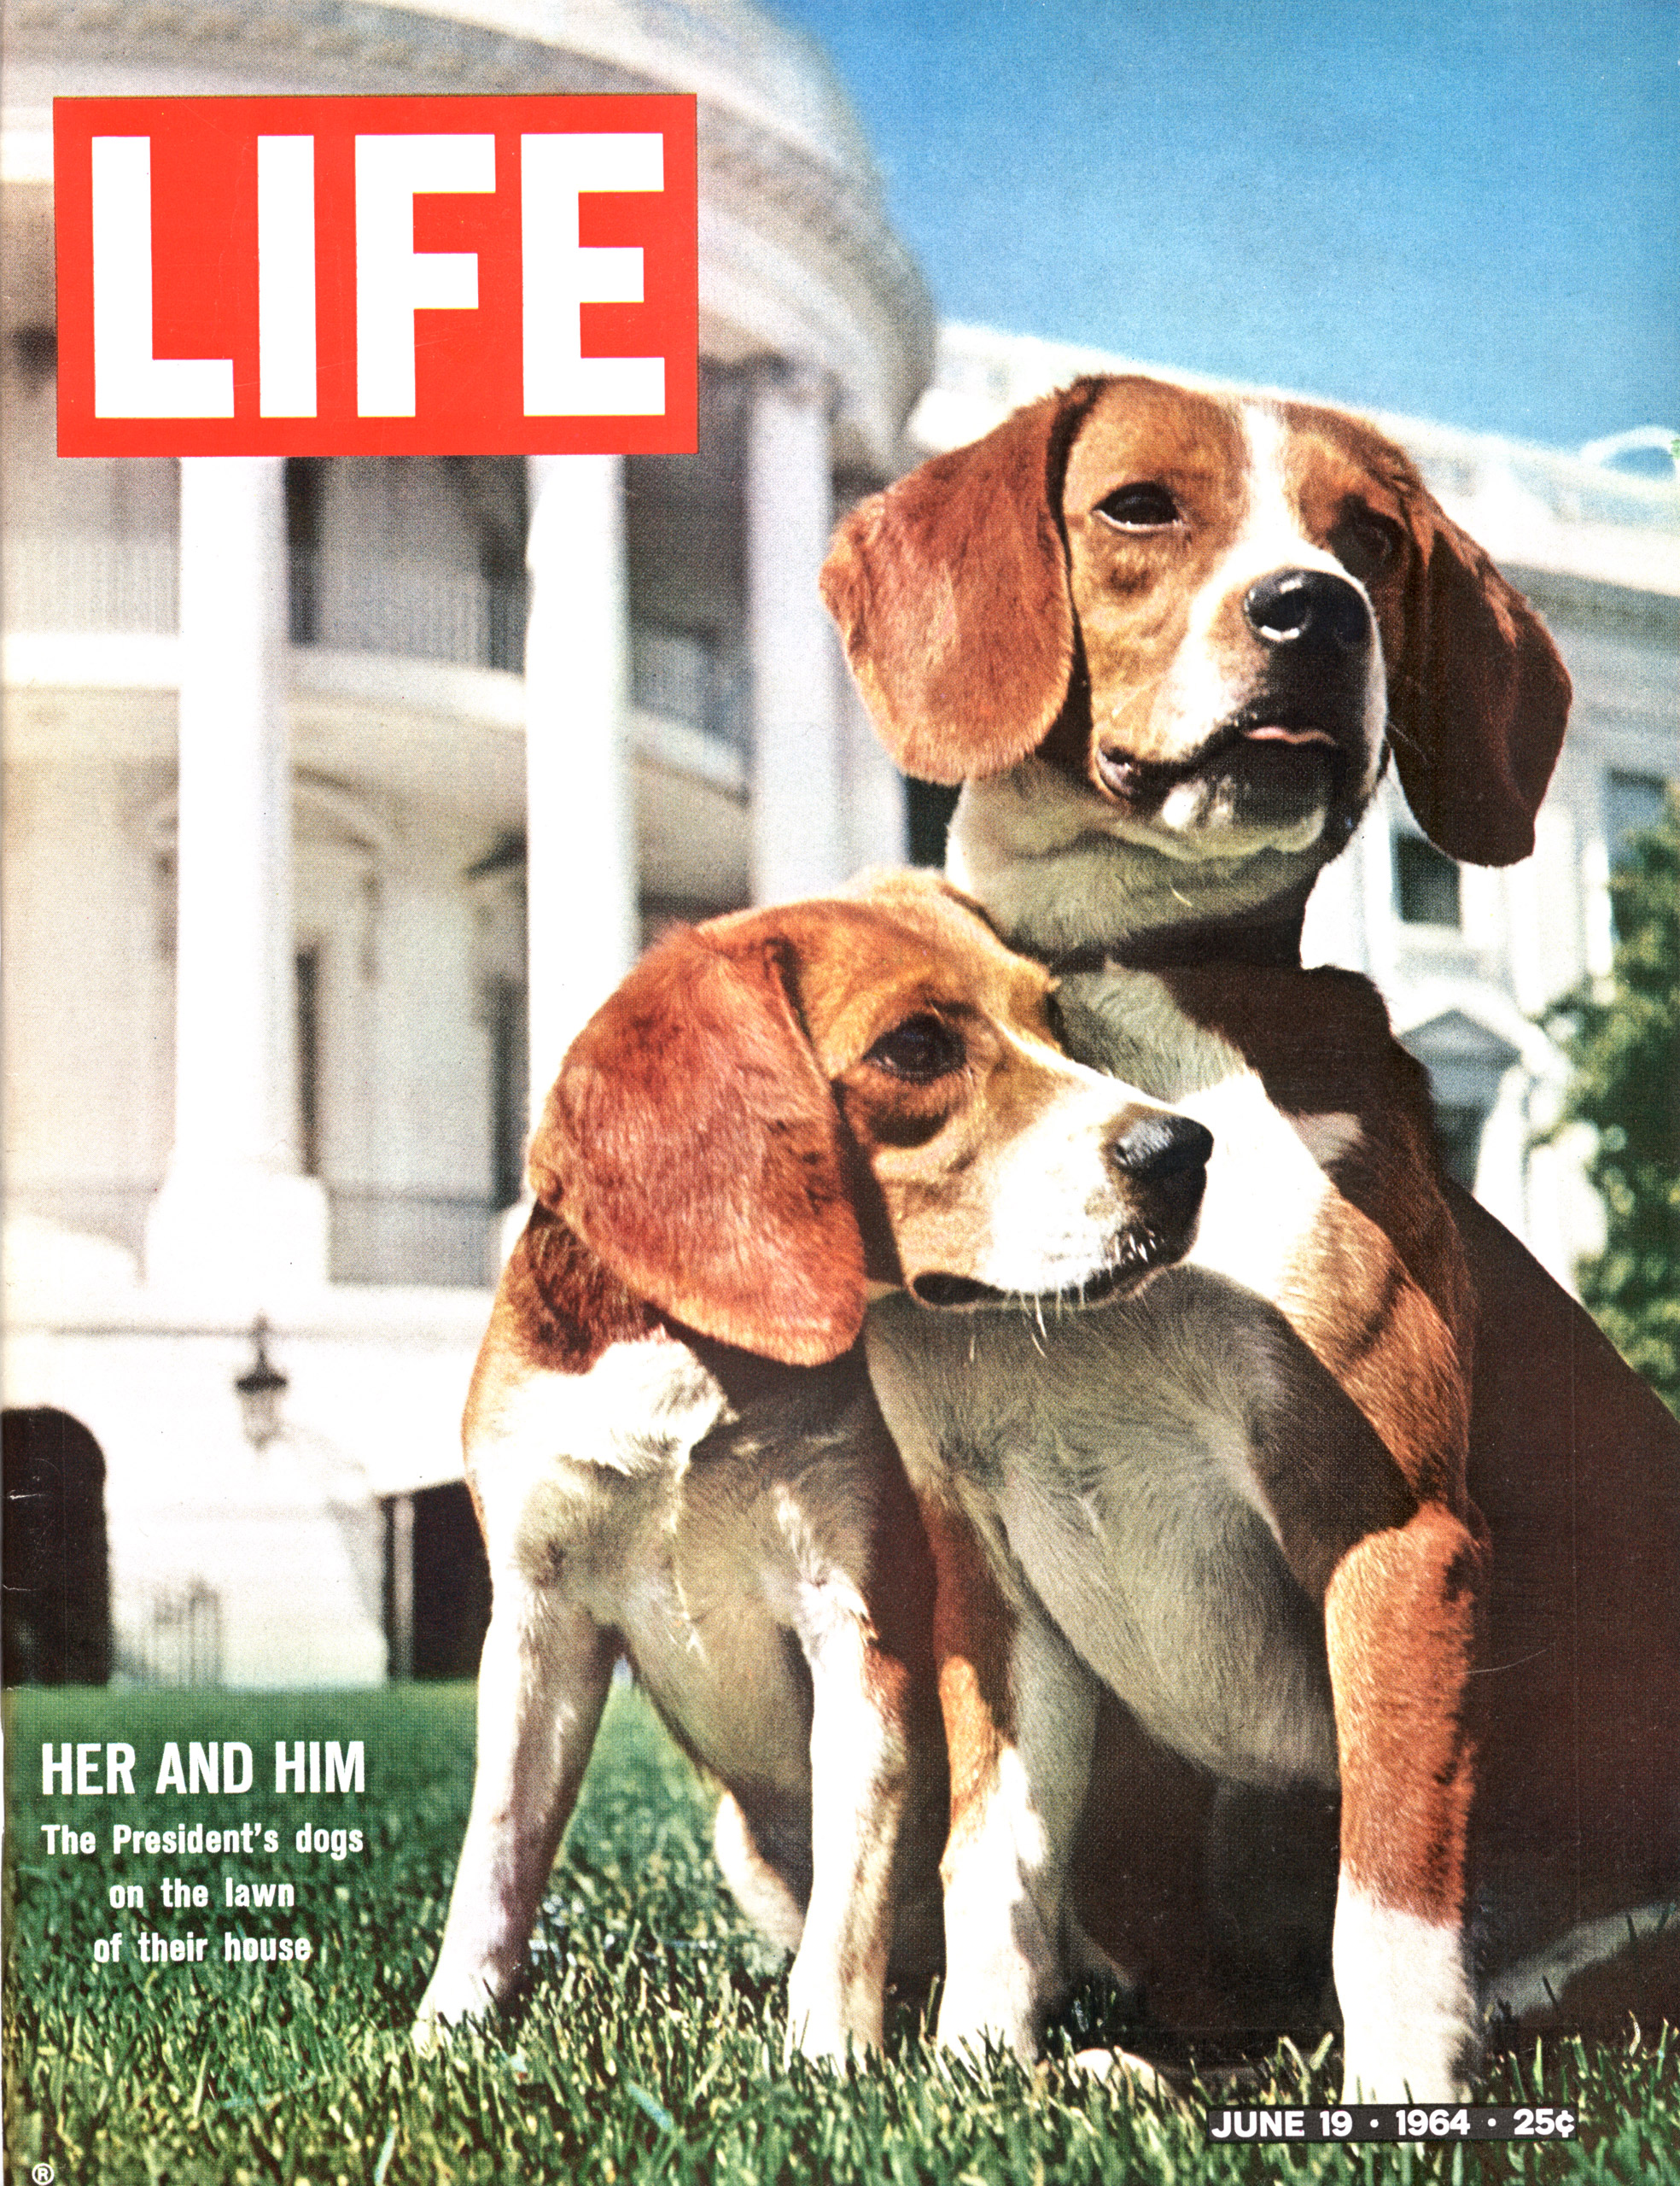 June 19, 1964 LIFE Magazine cover